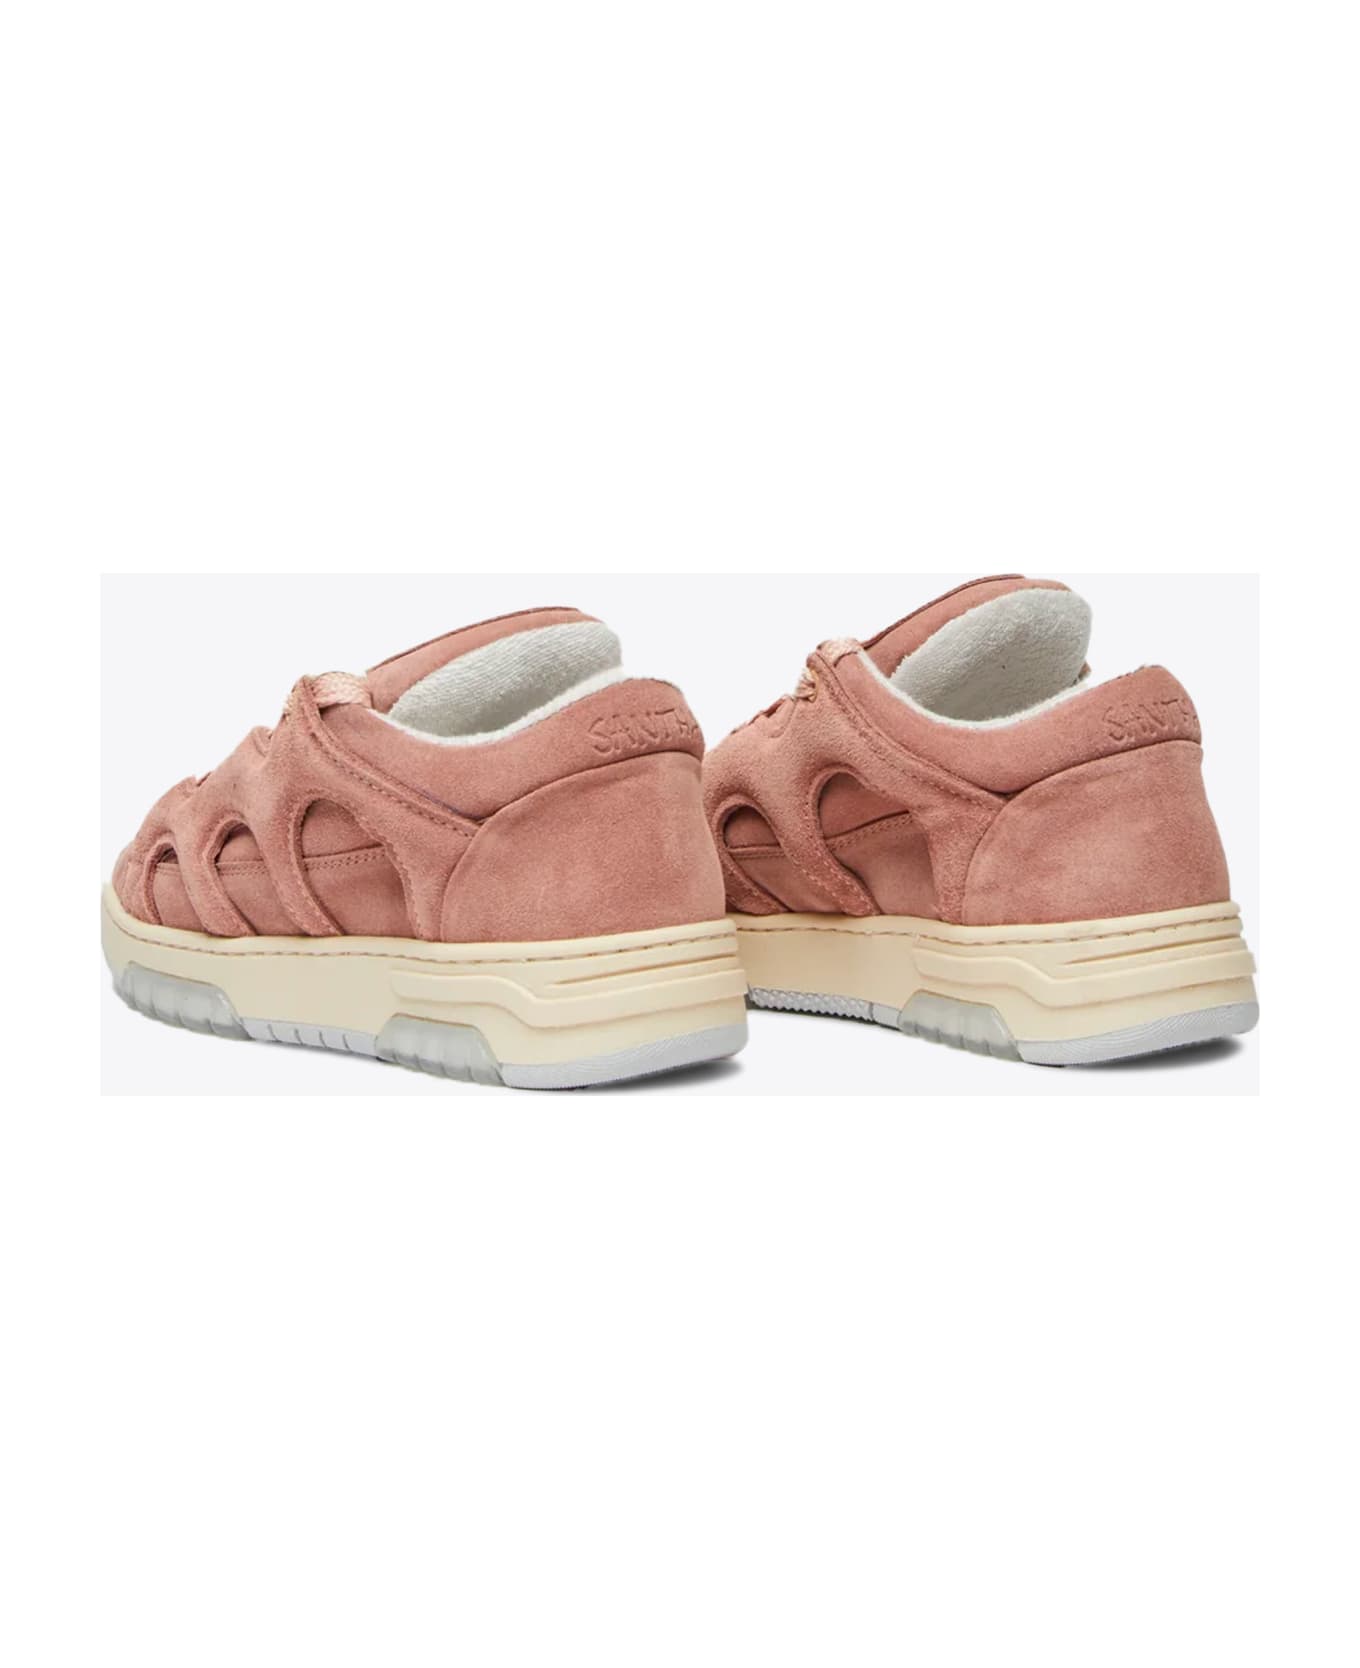 Paura Santha 1 Suede Antique pink suede low sneaker - Rosa antico